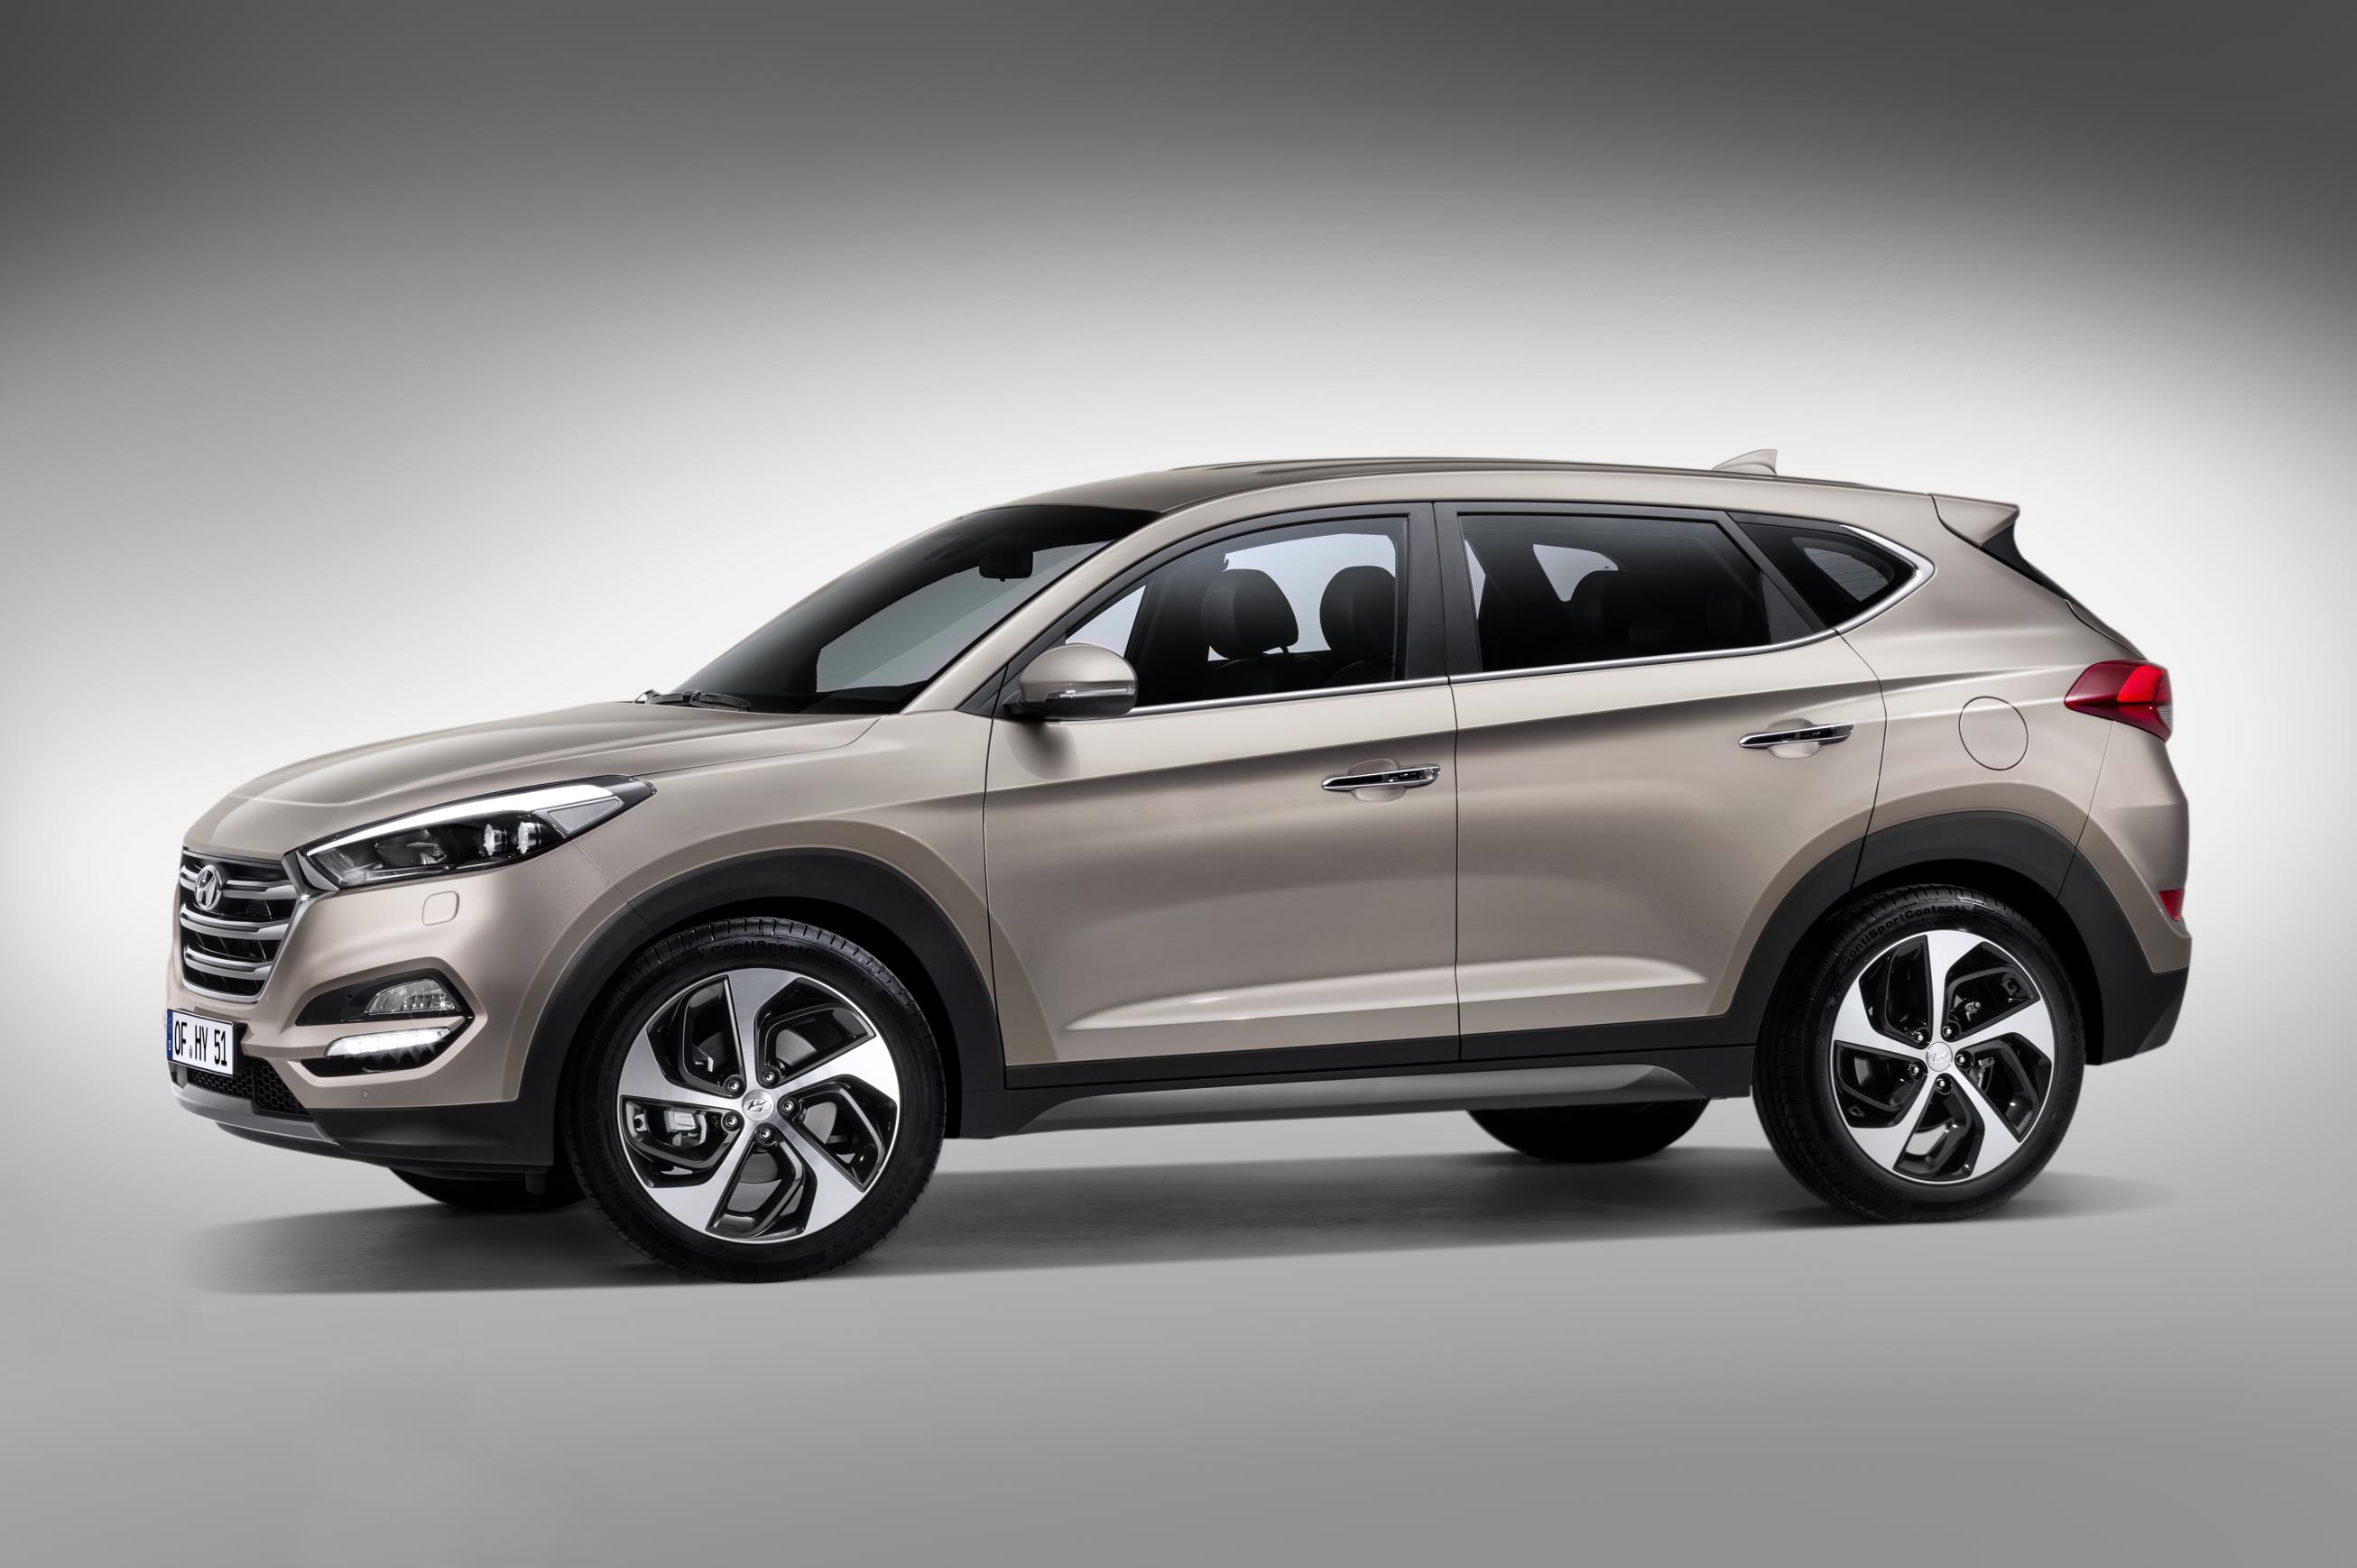 2016 (European) Hyundai Tucson is AllNew [Geneva Preview] The Fast